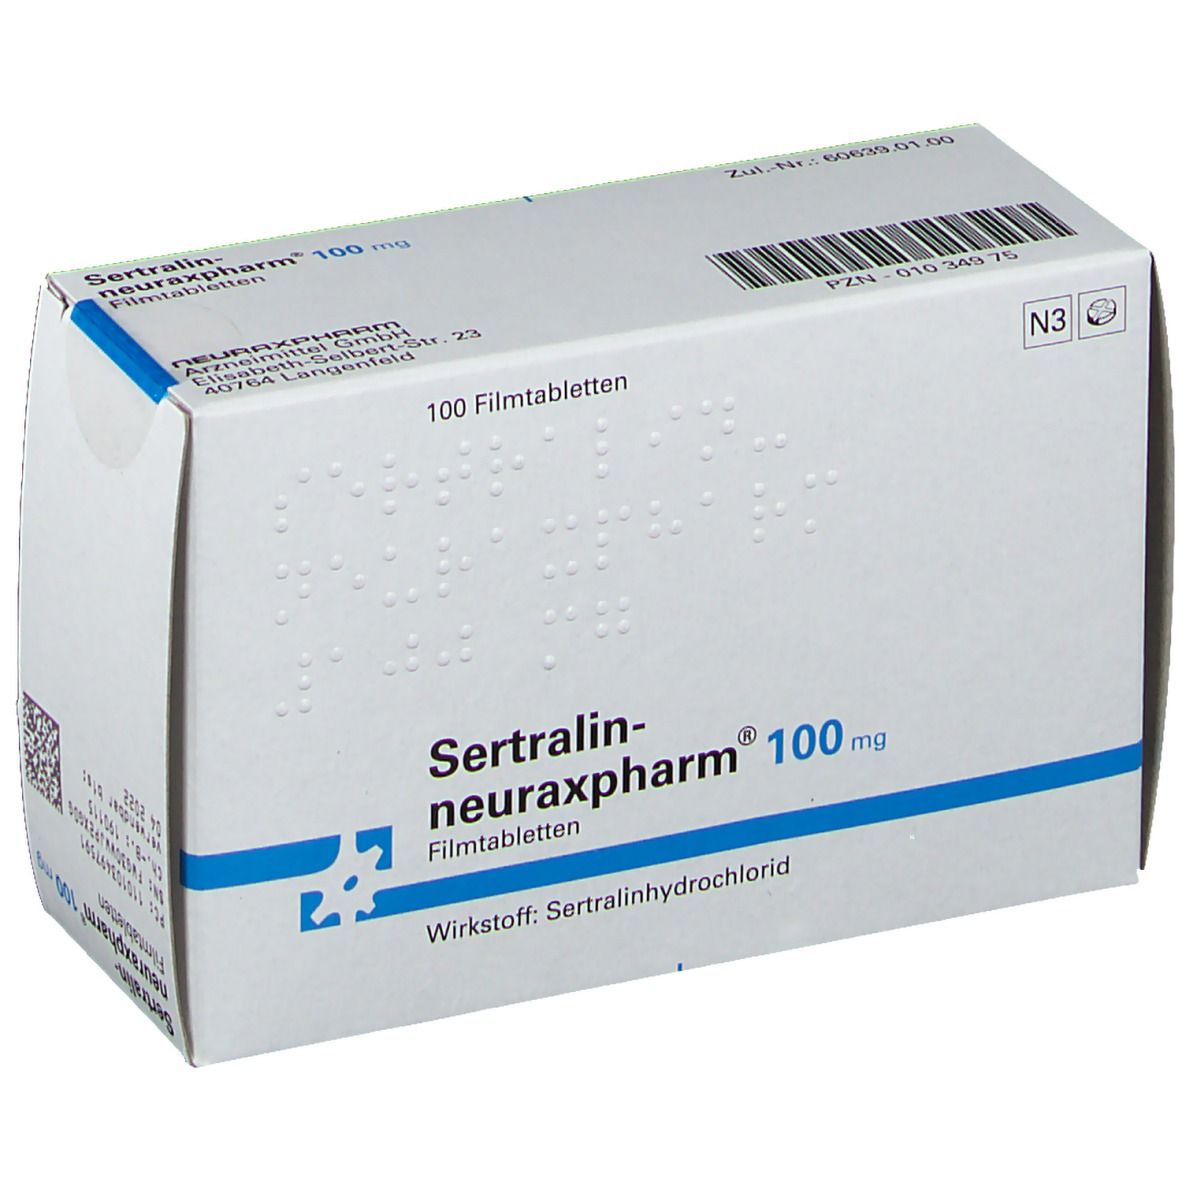 Sertralin-neuraxpharm® 100 mg